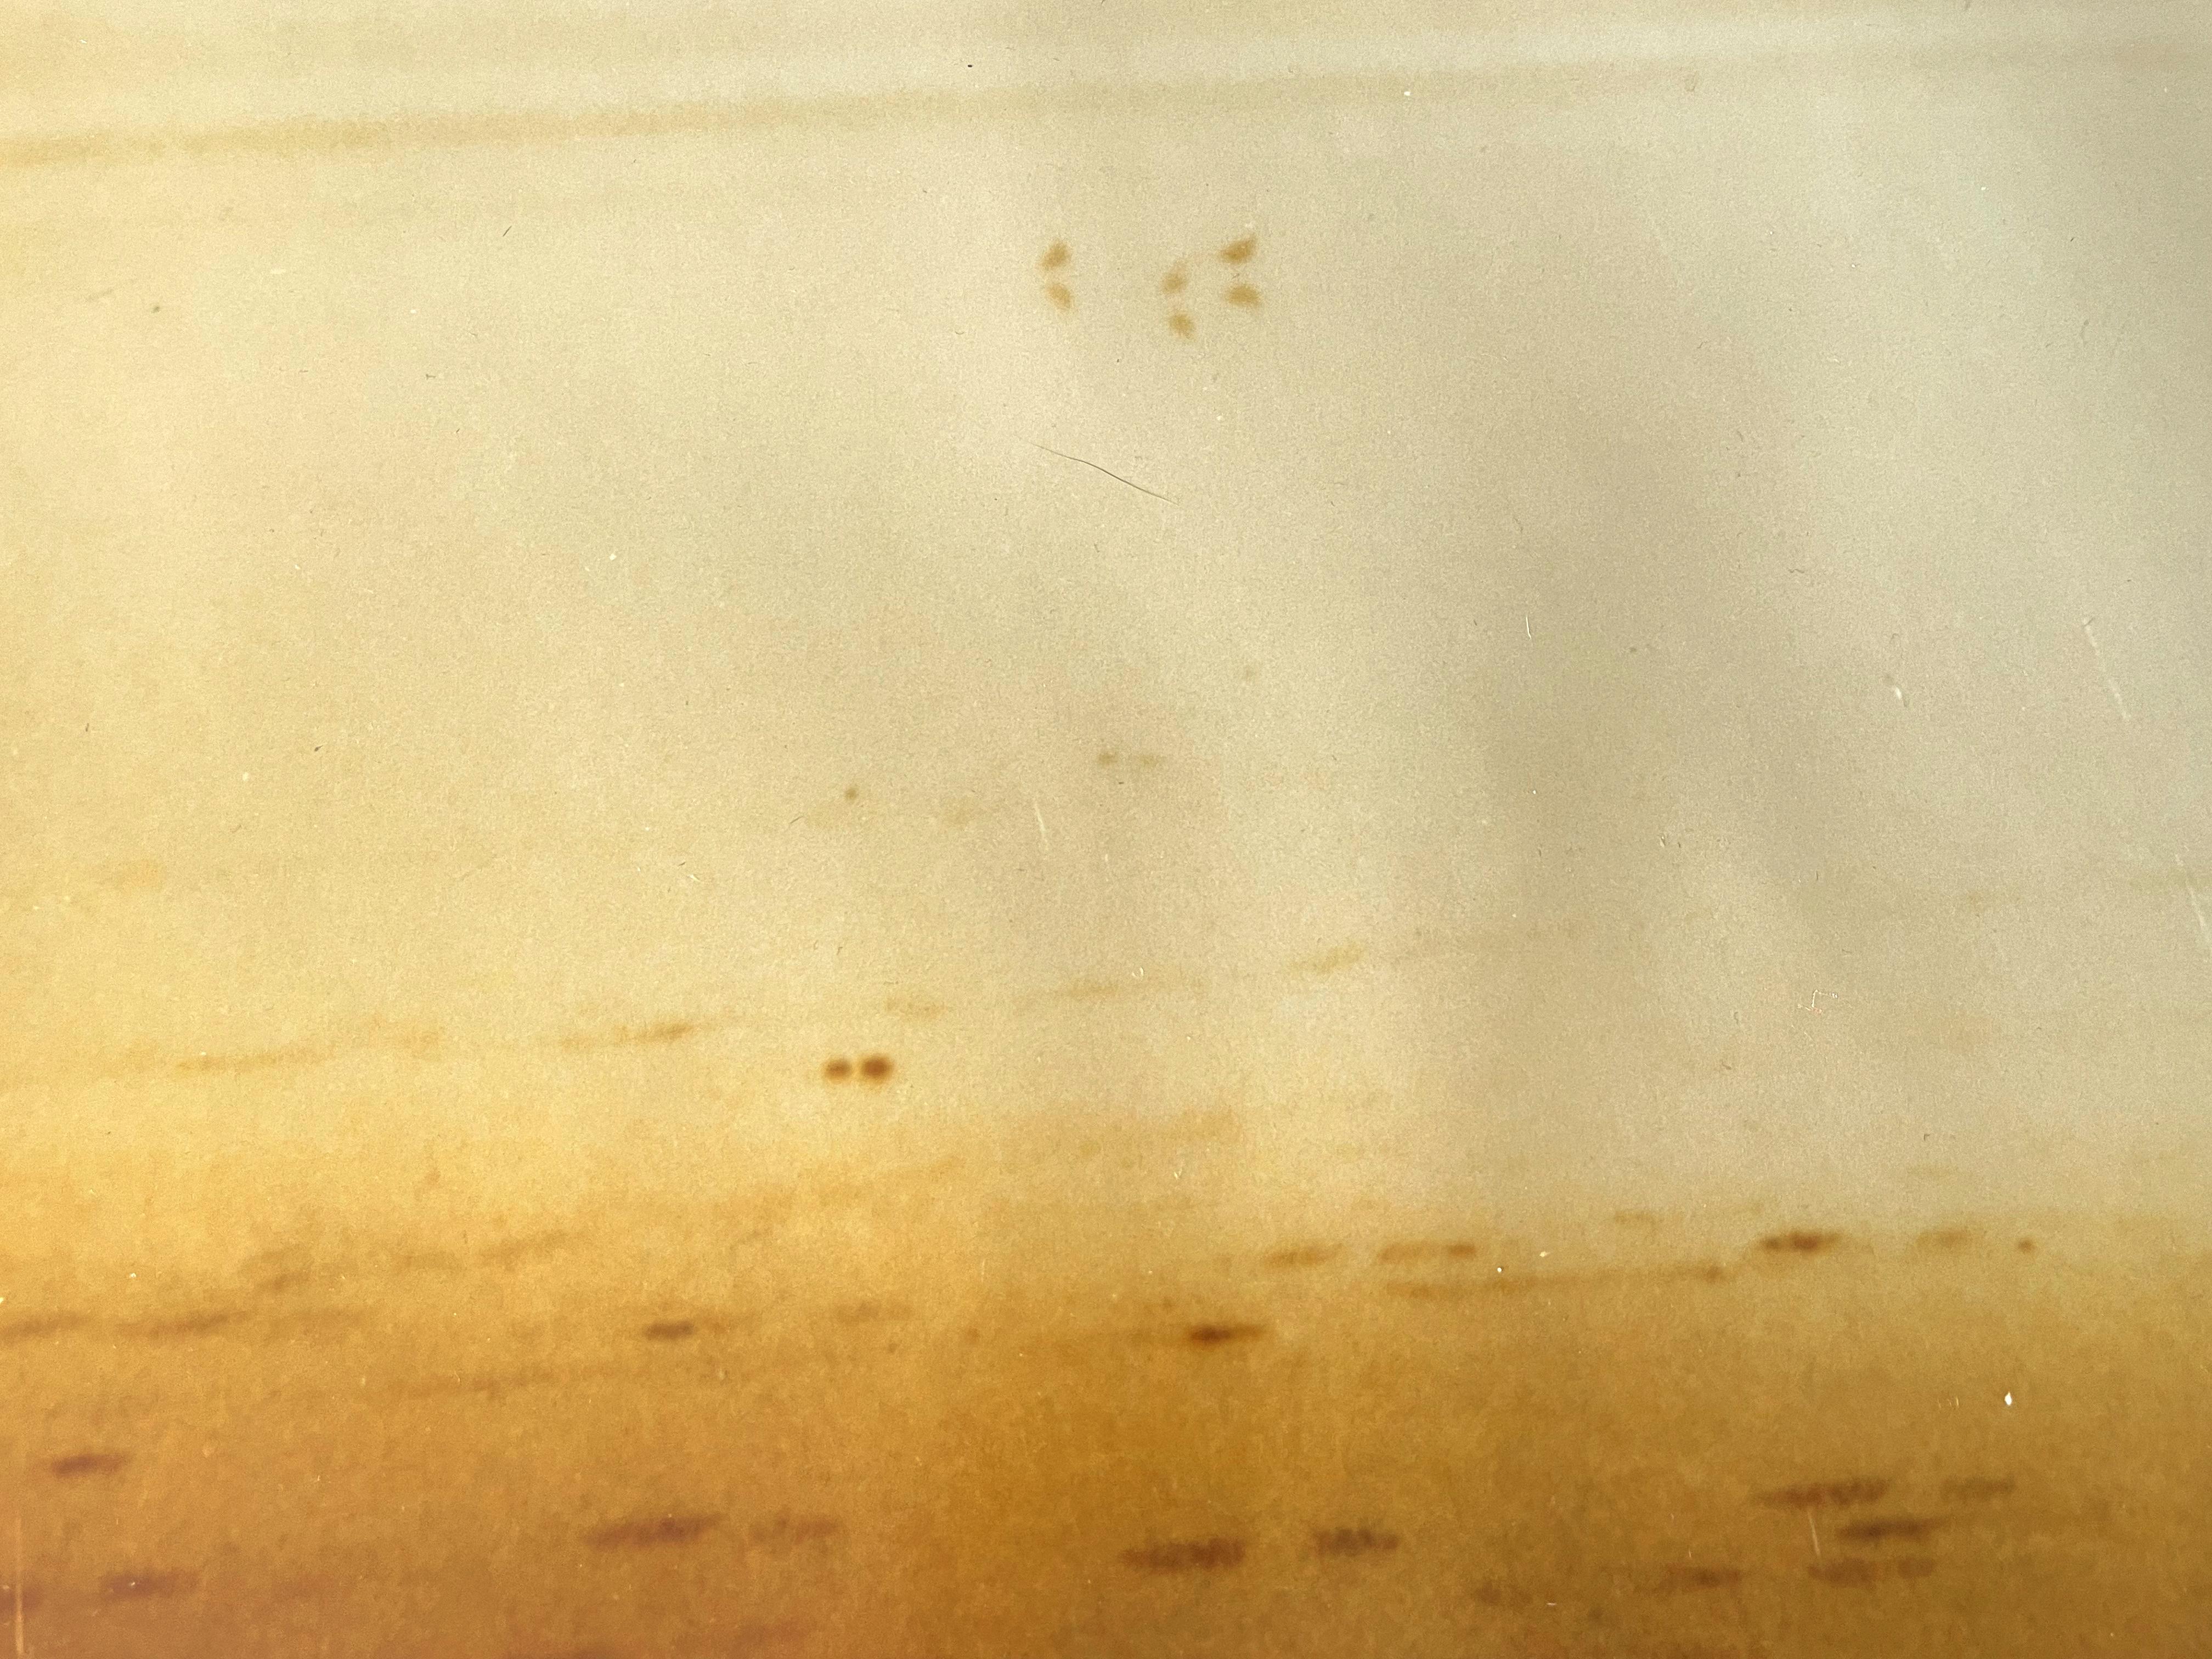 Sunset (Stranger than Paradise) - Analog, hand-print, Polaroid - Photograph by Stefanie Schneider